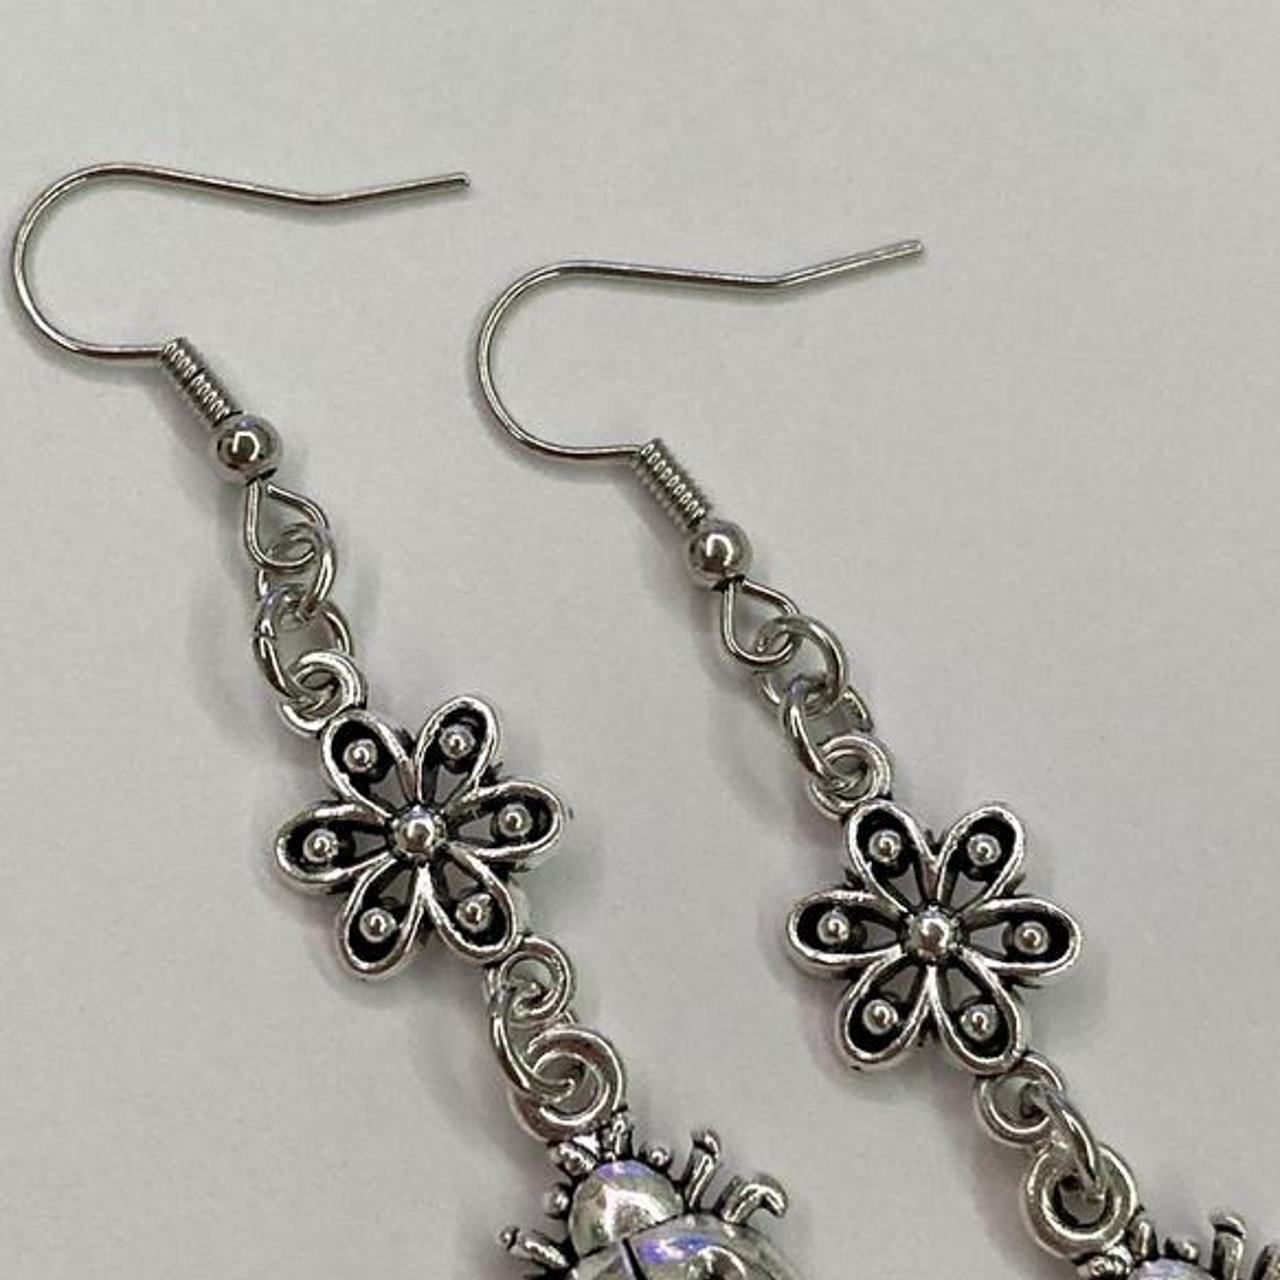 Product Image 4 - Floral Ladybug Earrings 🐞
Handmade silver